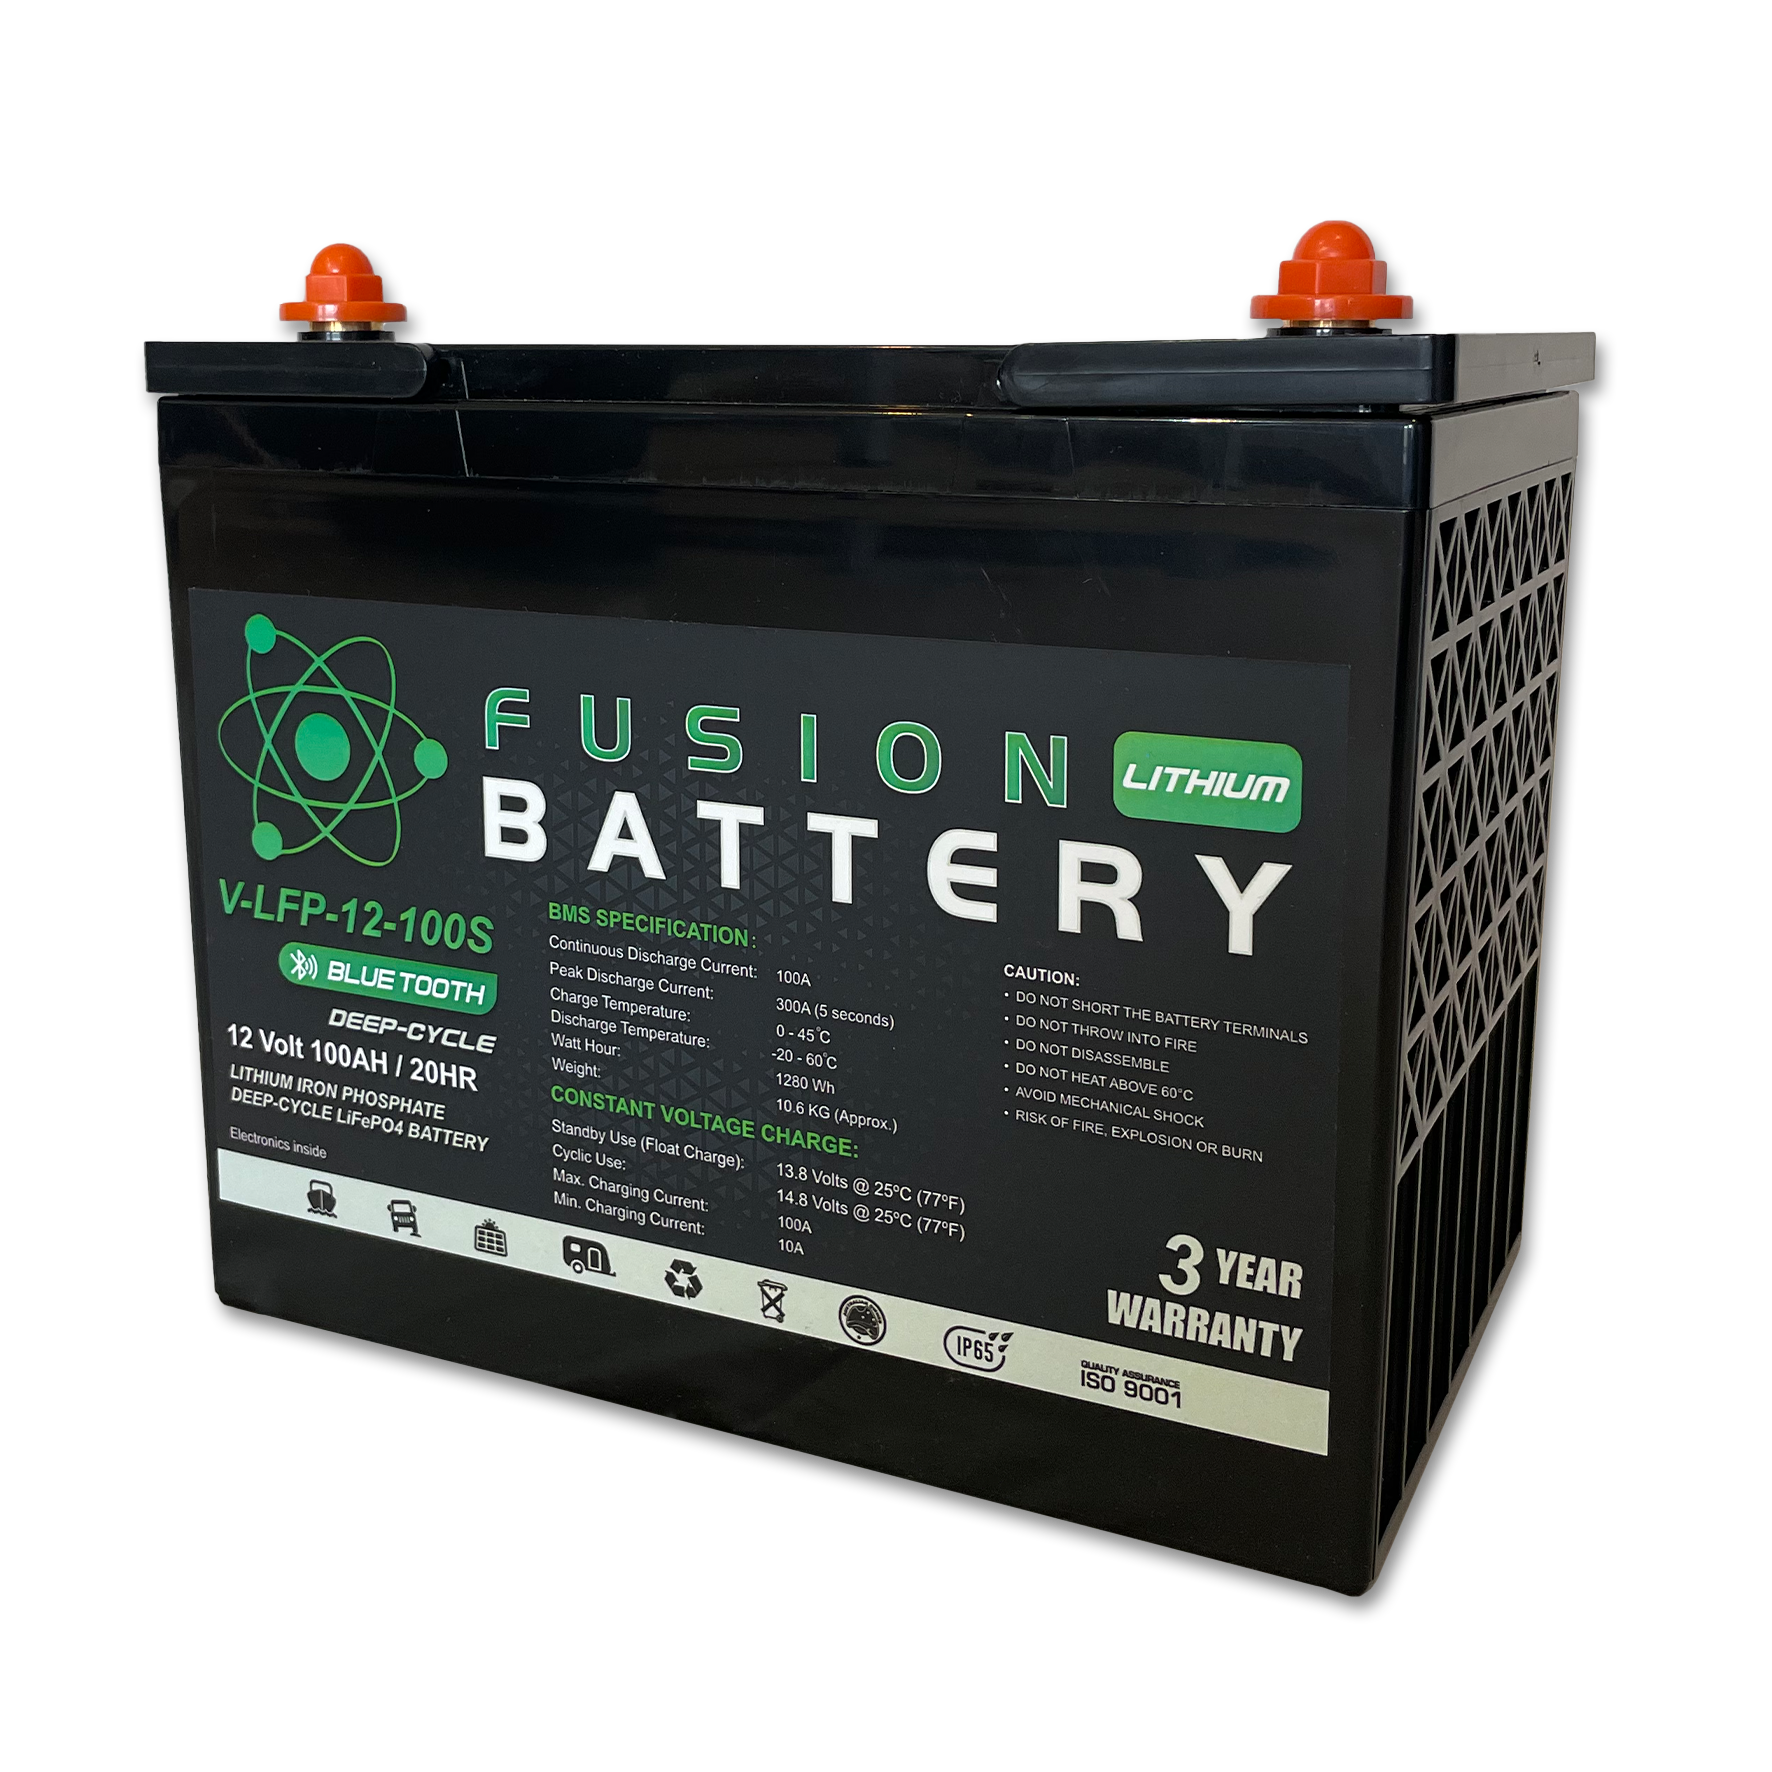 12V100AH lithium battery - SAKO